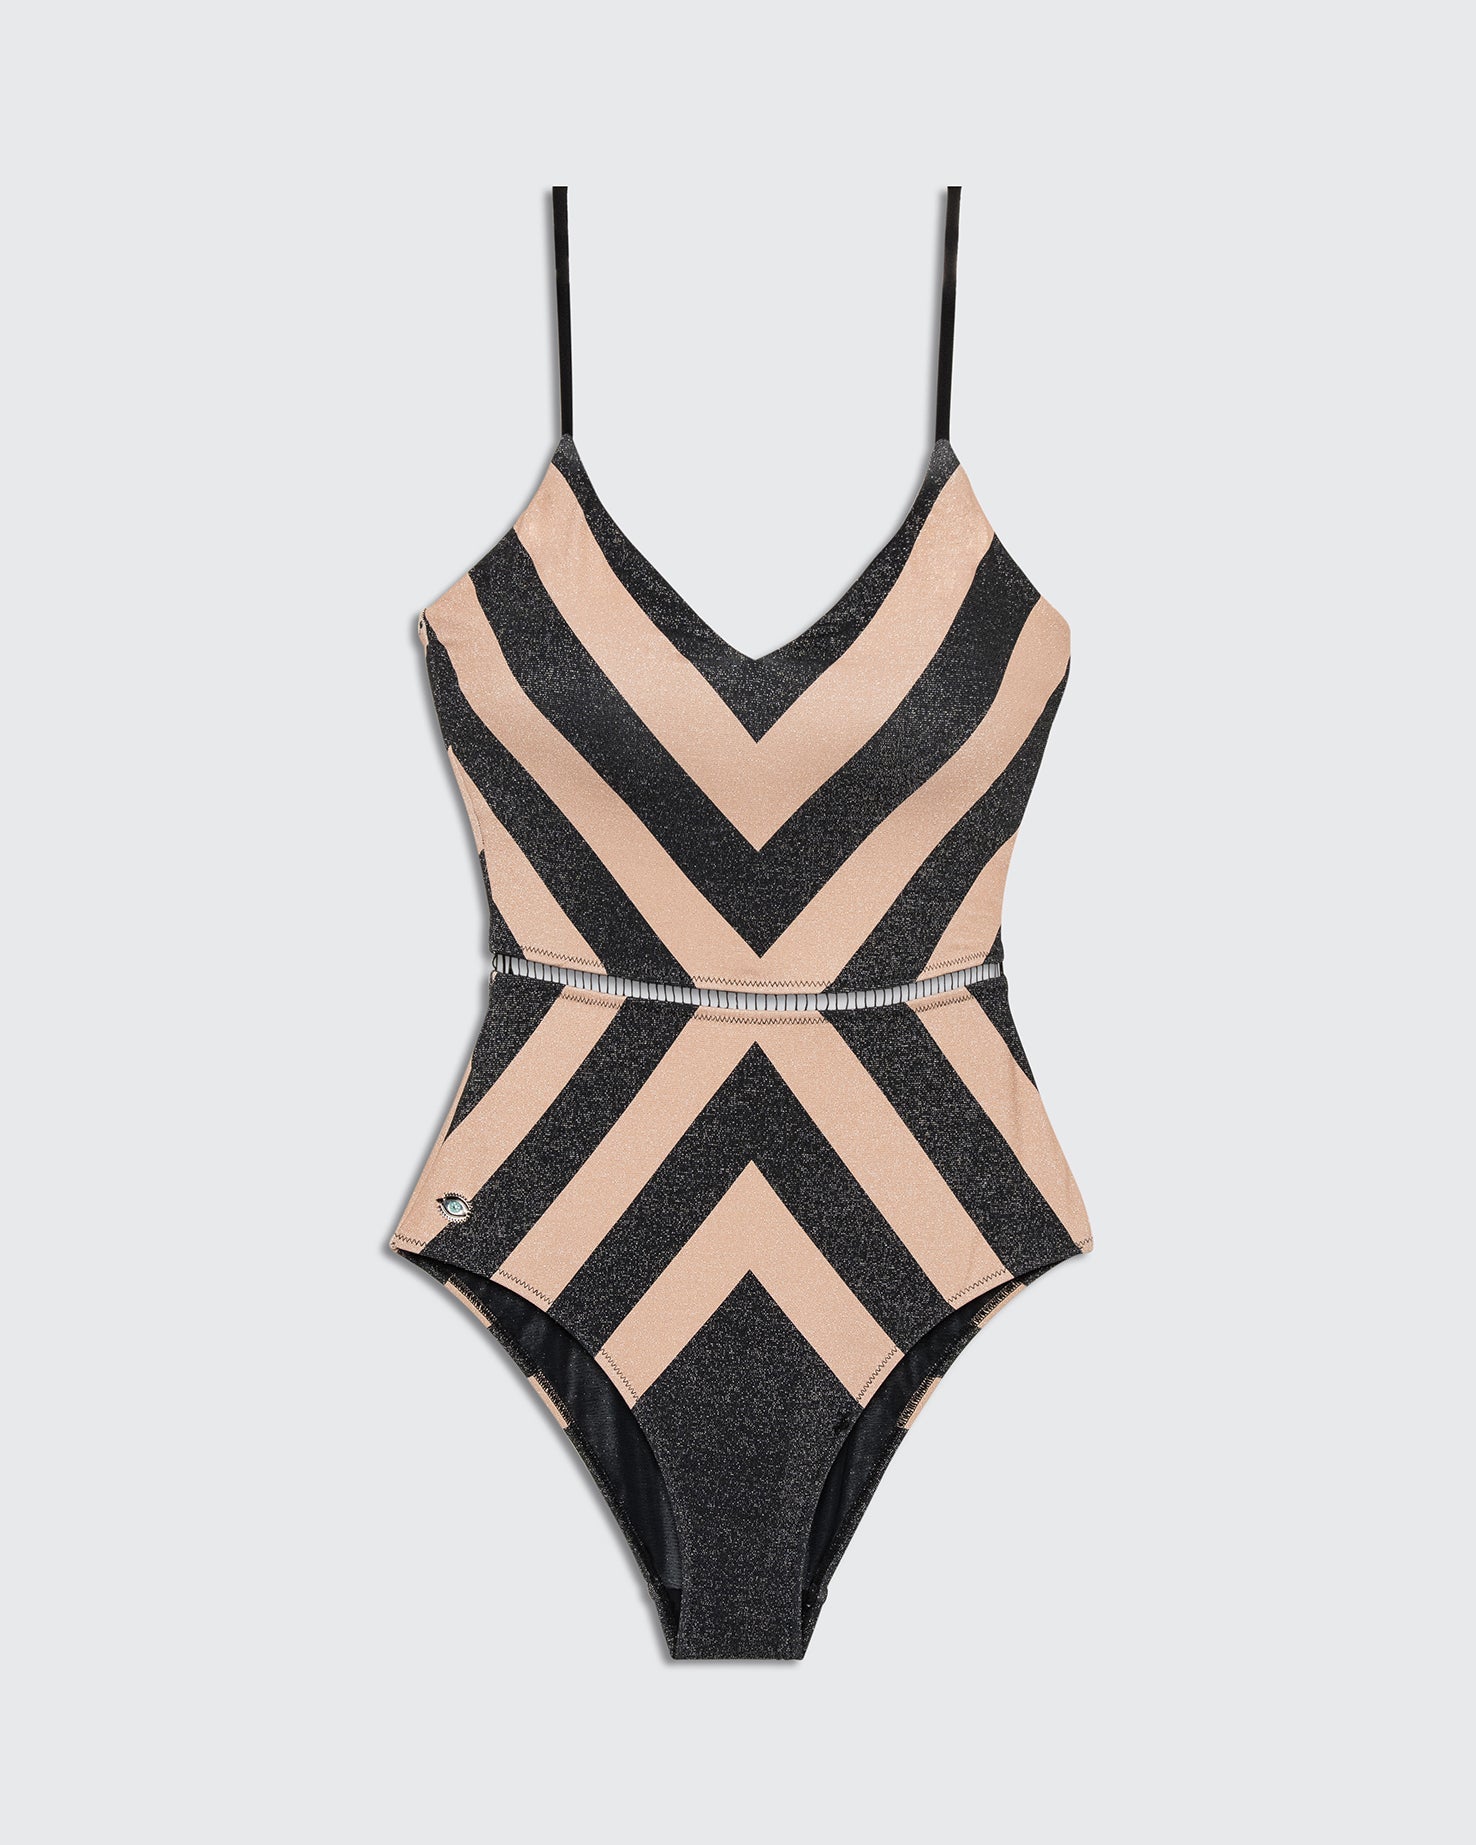 ARAVA STRIPES BLACK NUDE - one piece -BiliBlond Swimwear